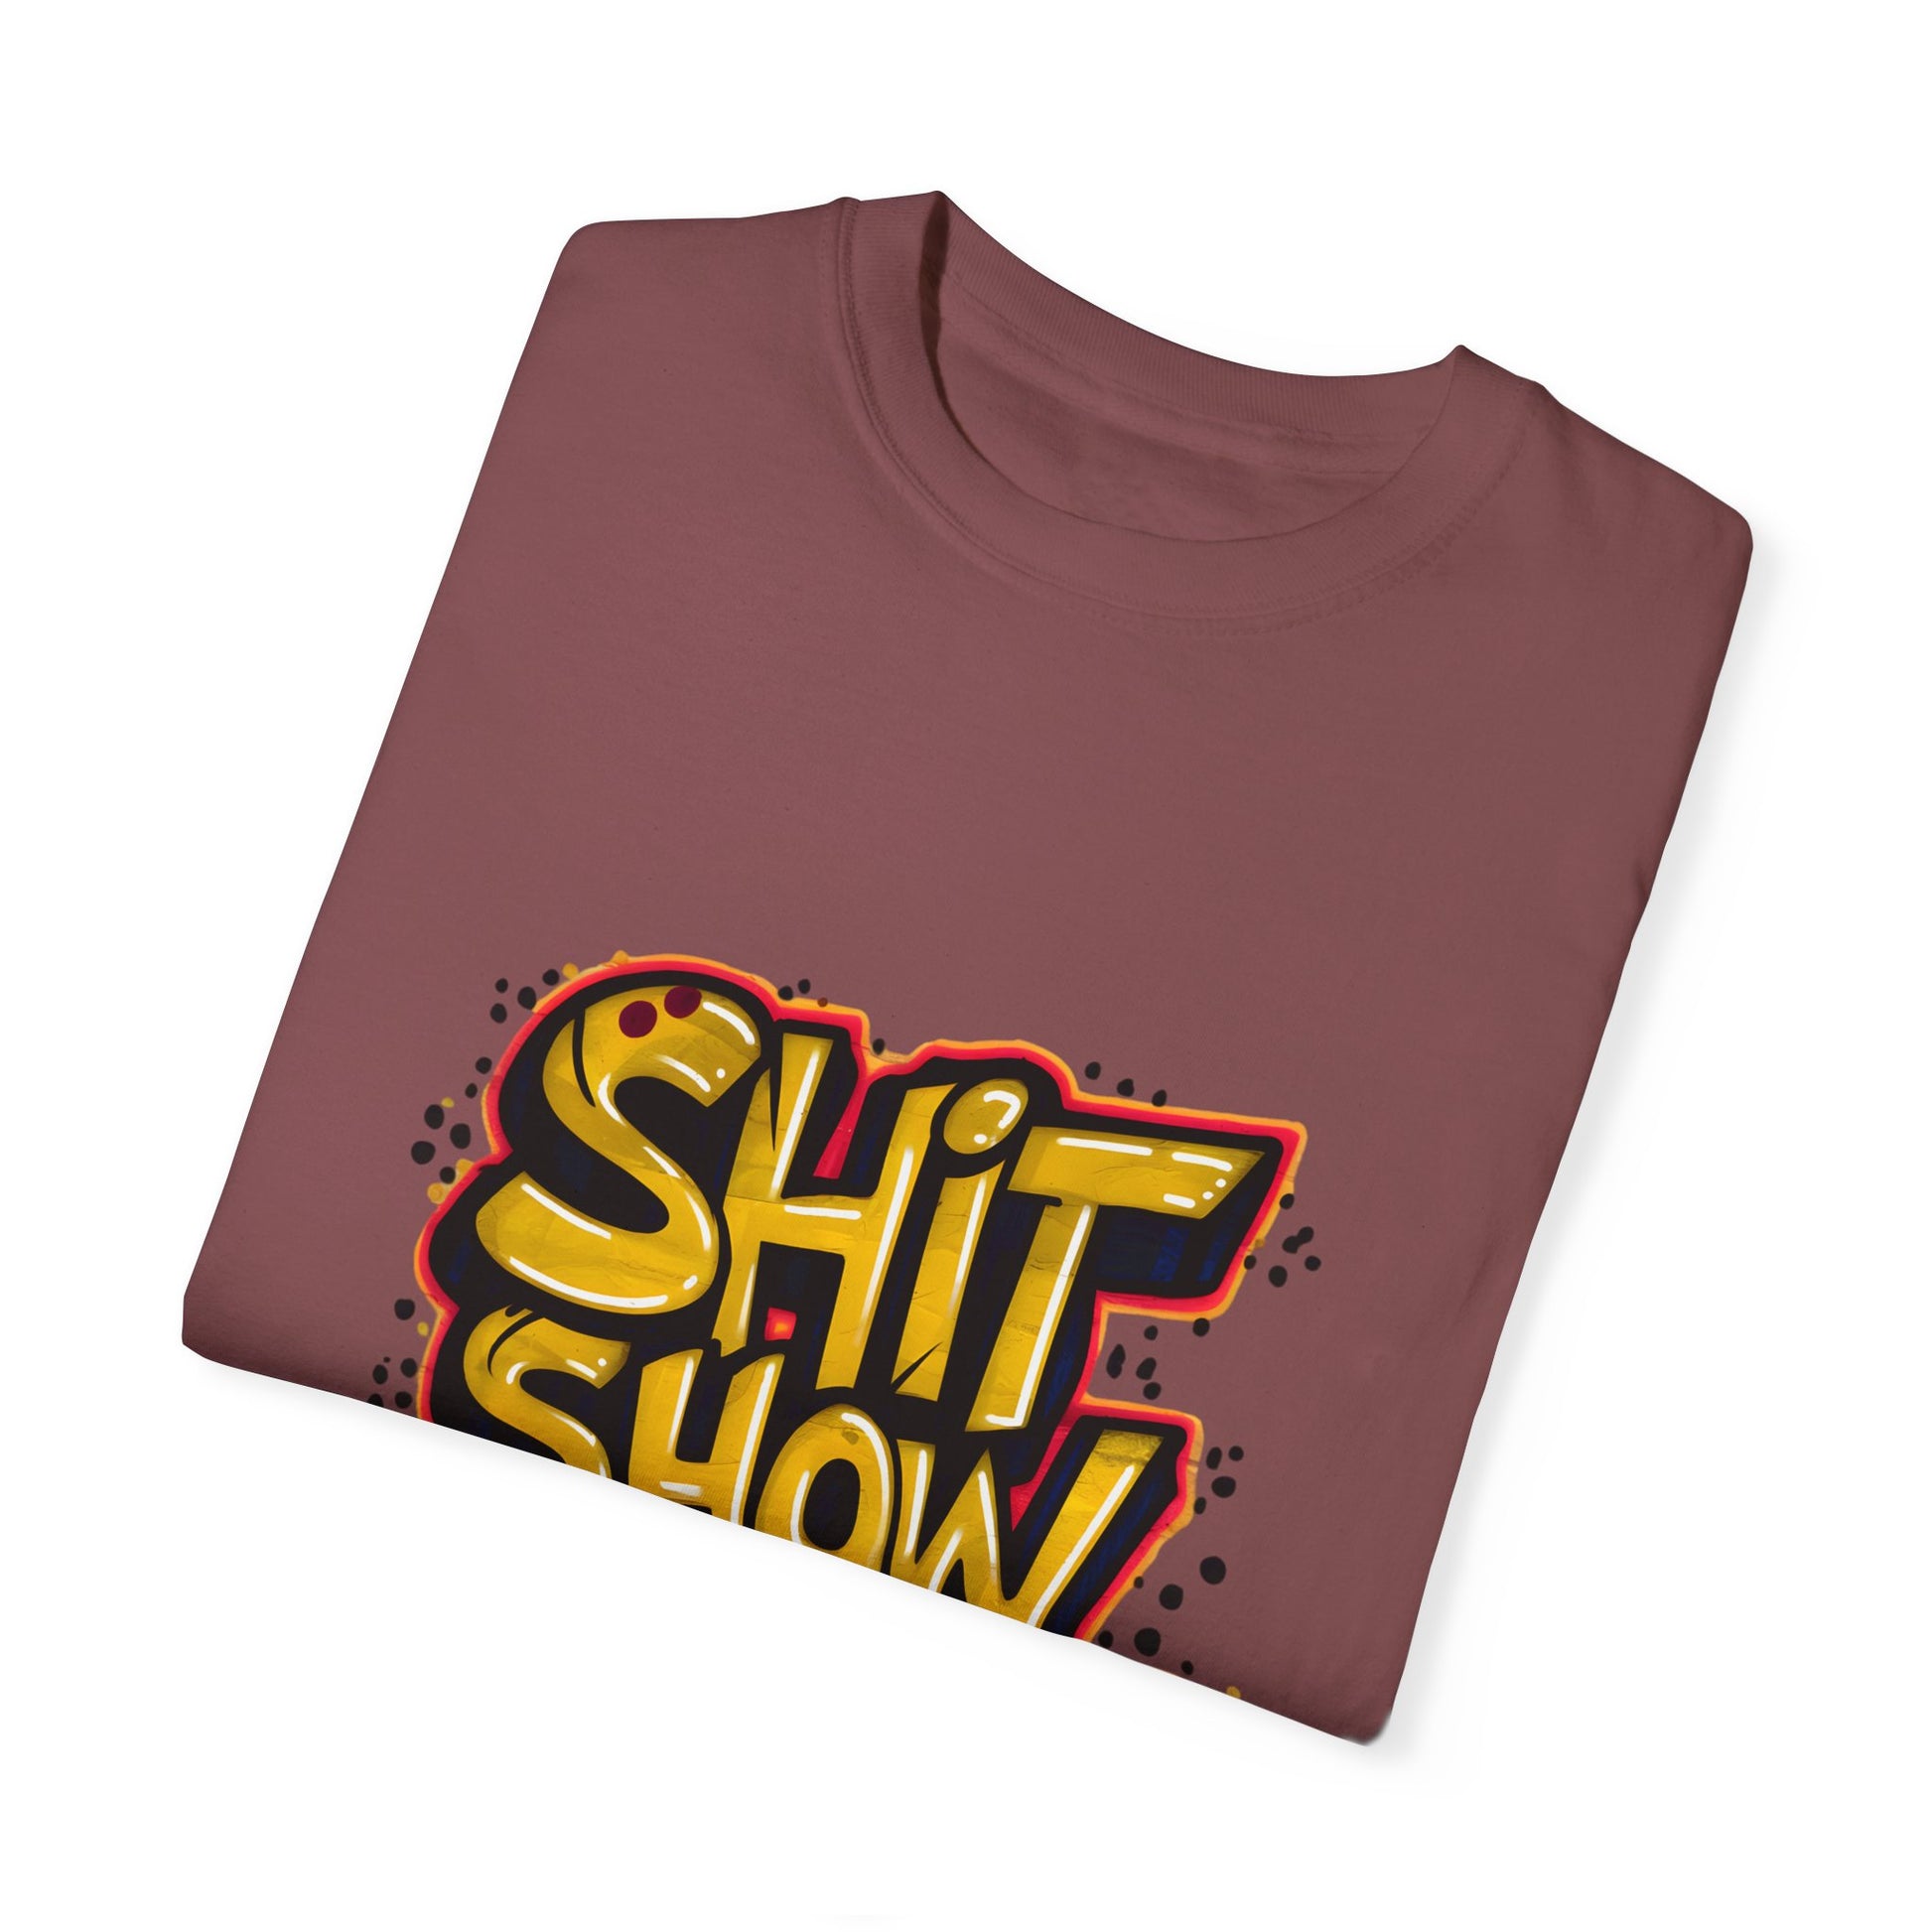 Shit Show Supervisor Urban Sarcastic Graphic Unisex Garment Dyed T-shirt Cotton Funny Humorous Graphic Soft Premium Unisex Men Women Brick T-shirt Birthday Gift-29